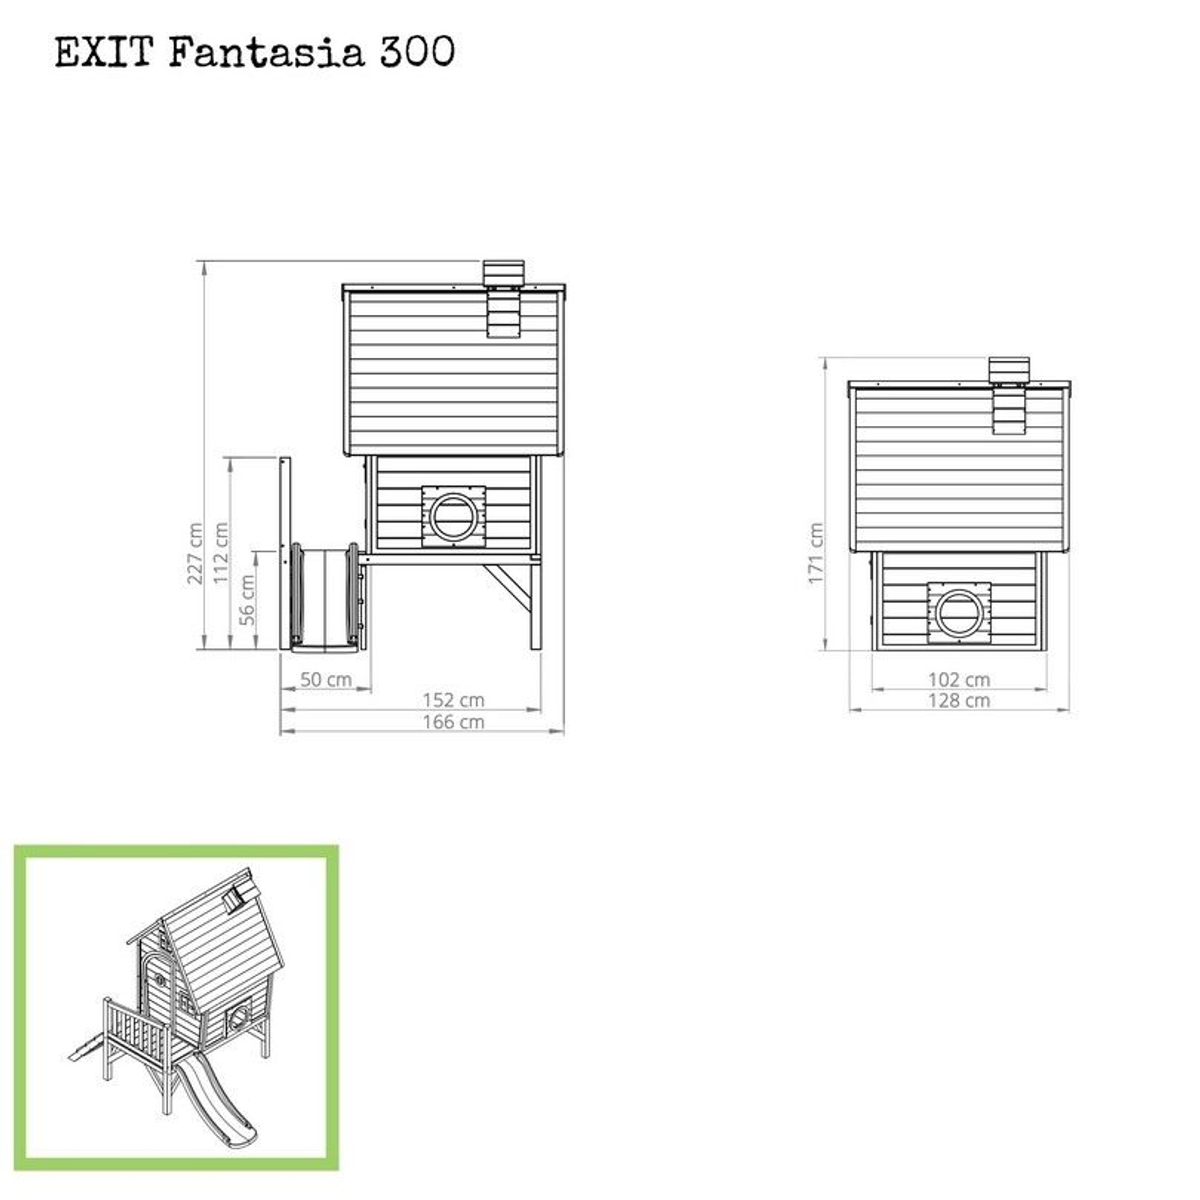 EXIT Fantasia 300 Houten Speelhuis - Naturel